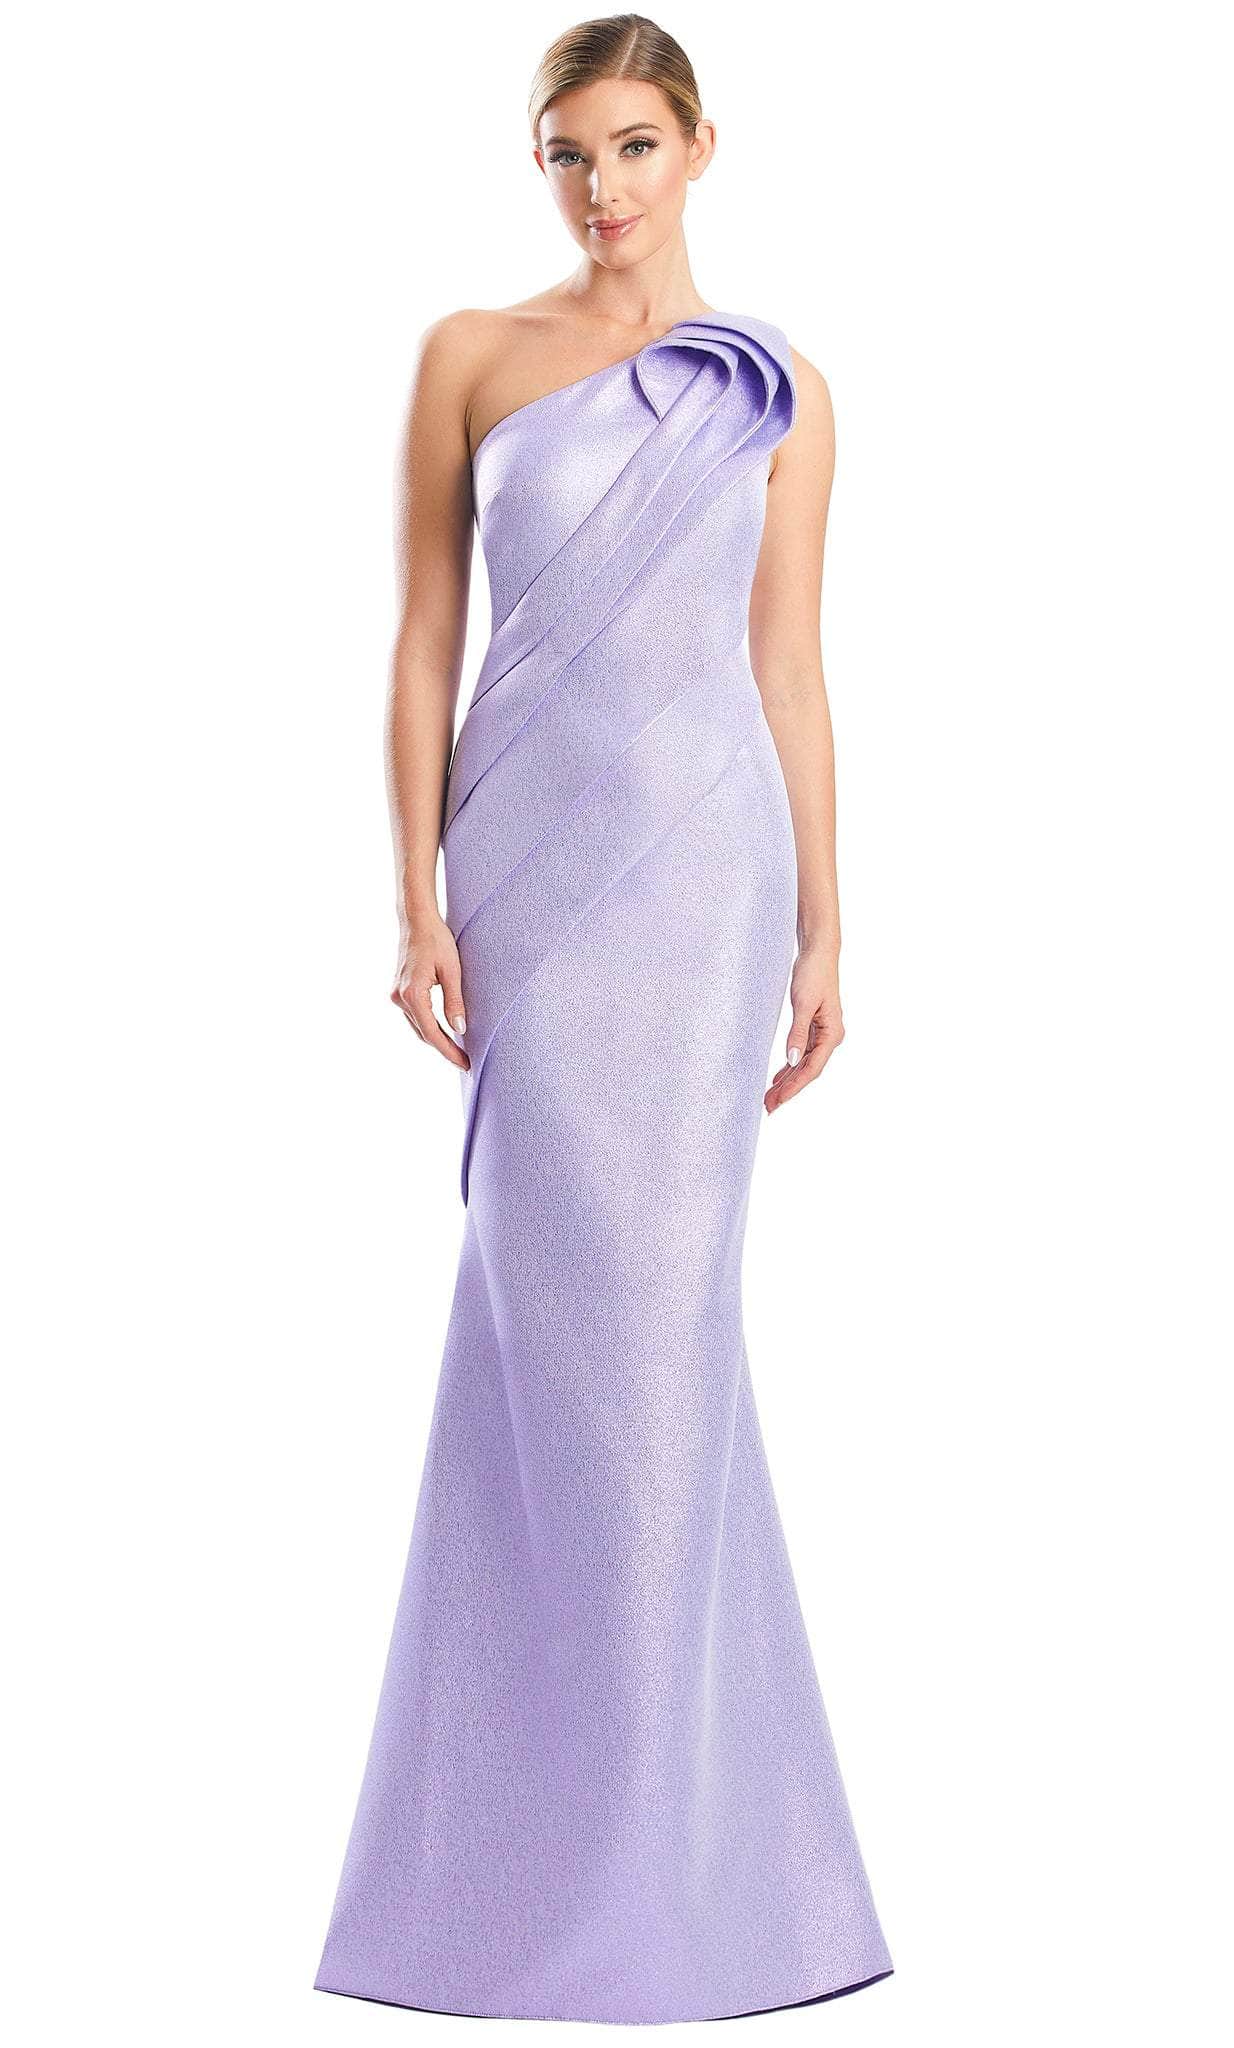 Alexander by Daymor 1790S23 - Asymmetrical Mermaid Evening Gown Evening Dresses 00 / Lavender